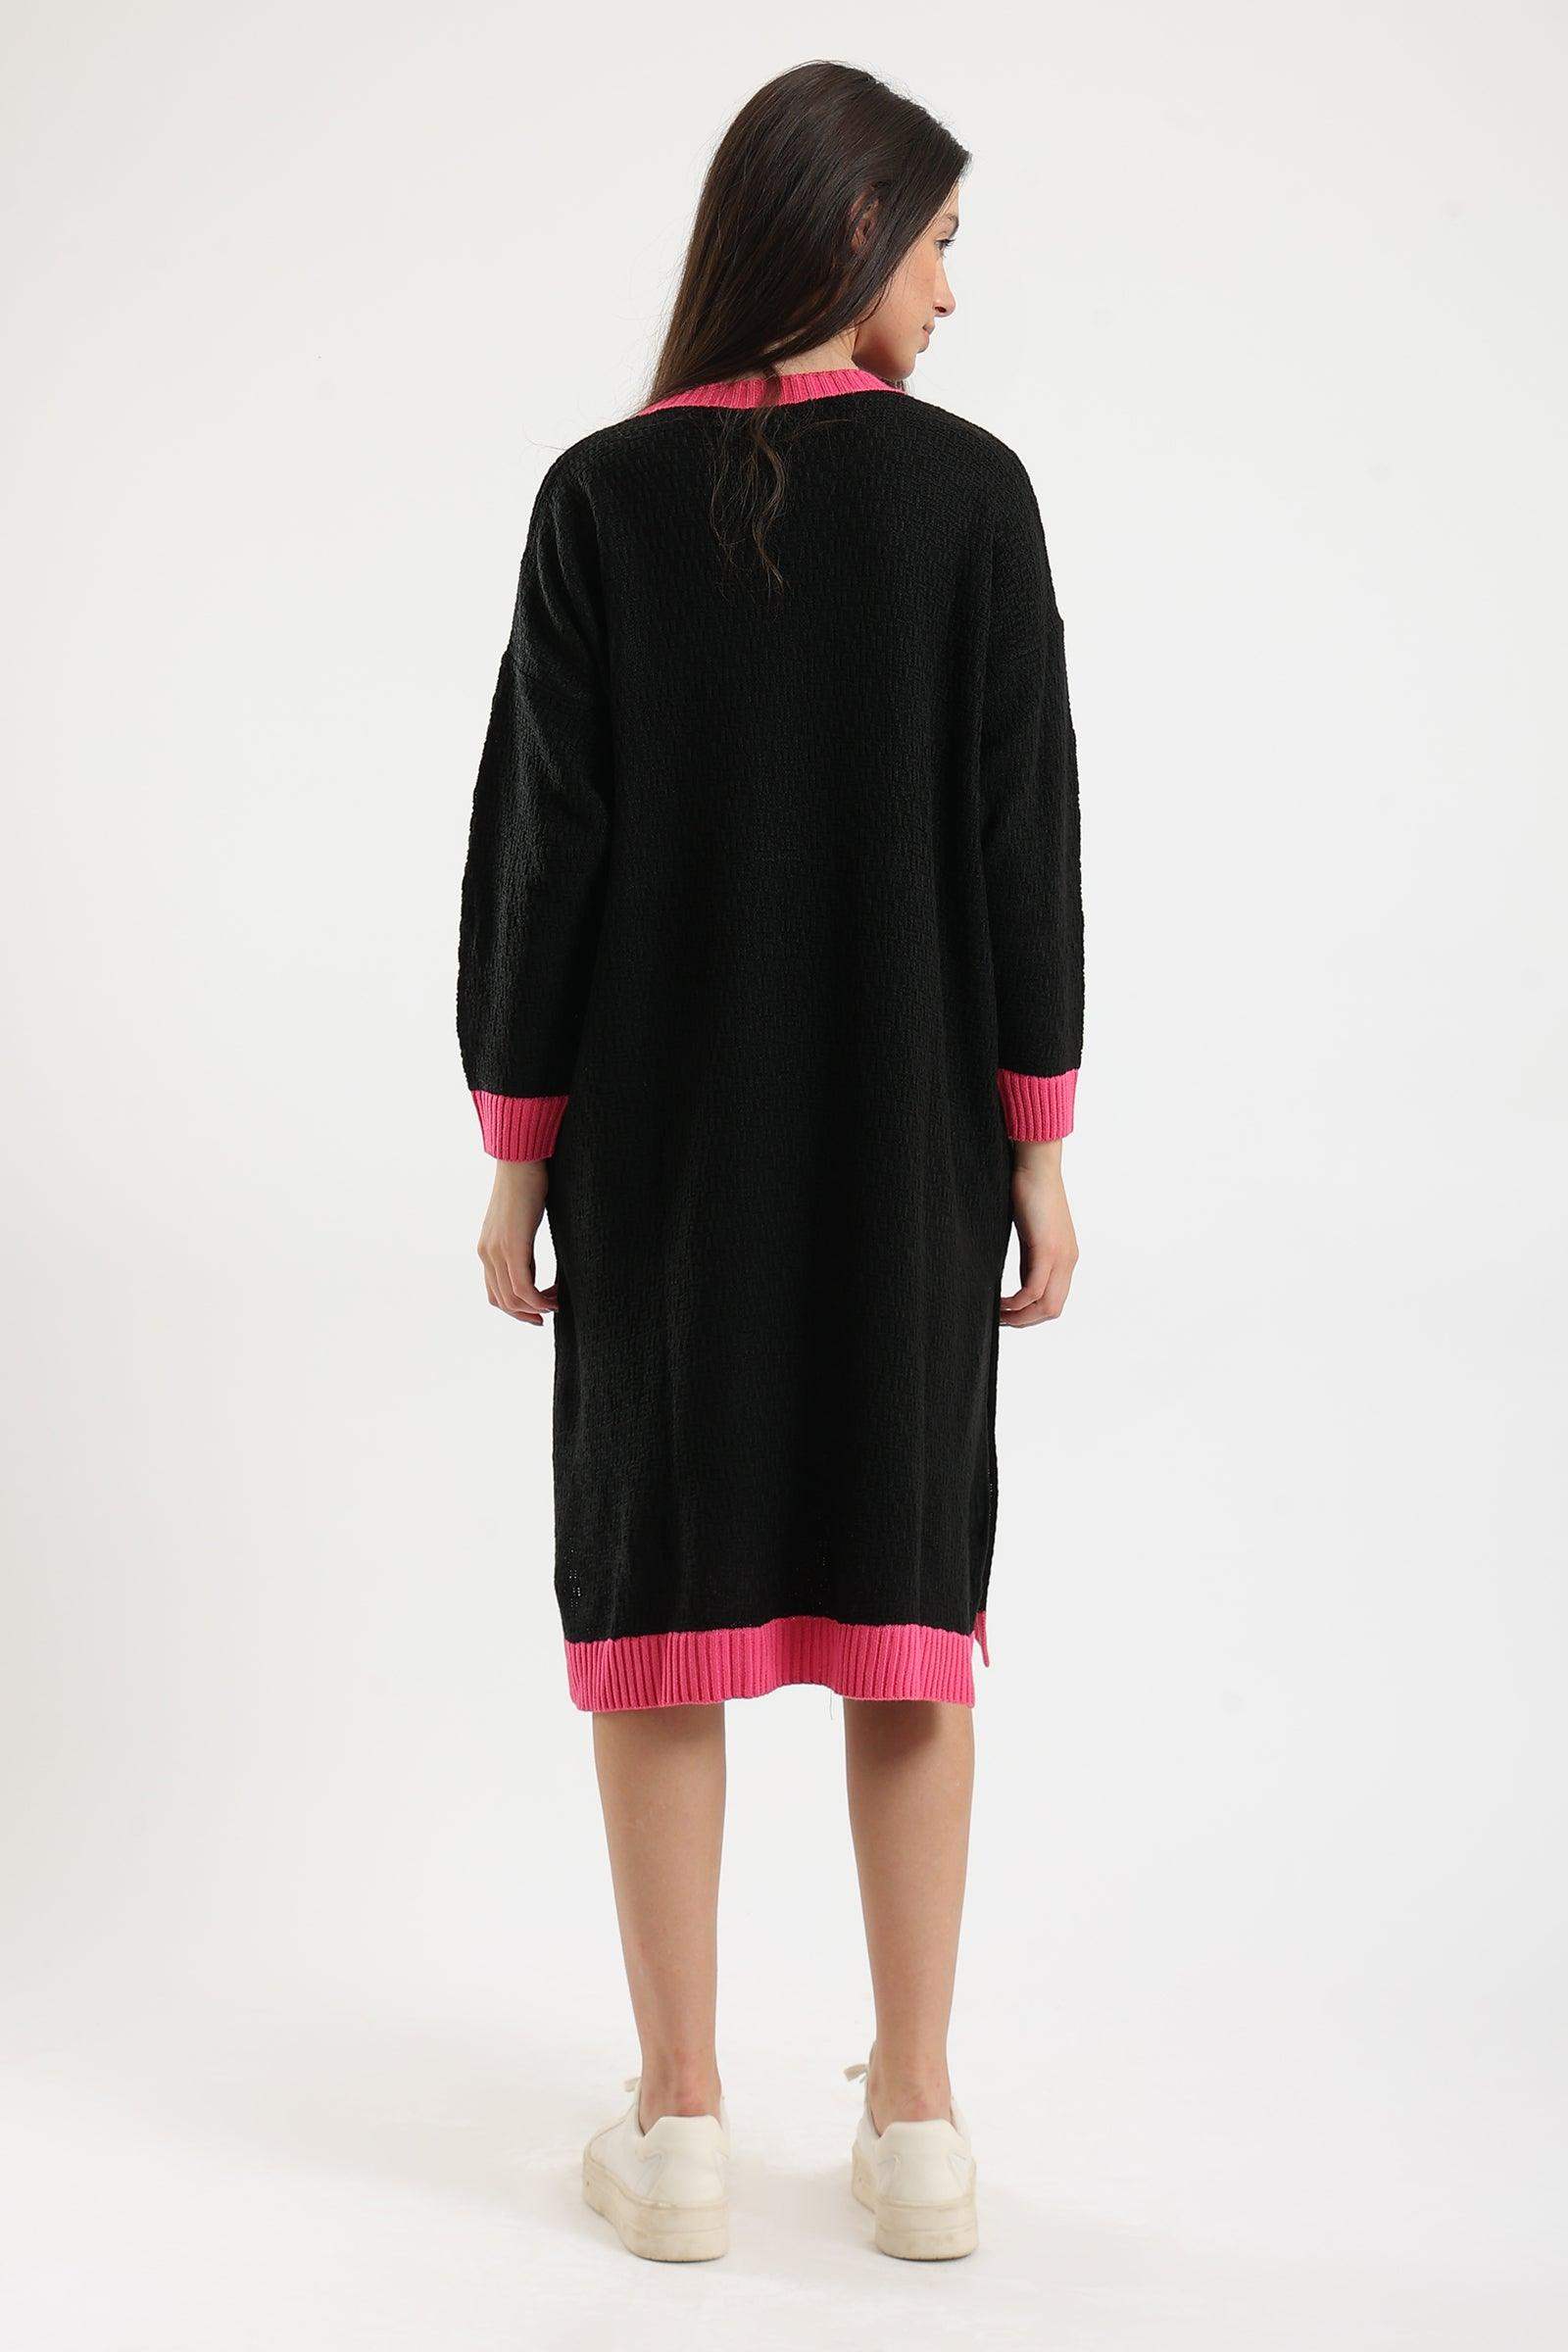 Pink Trim Wool Dress - Carina - كارينا